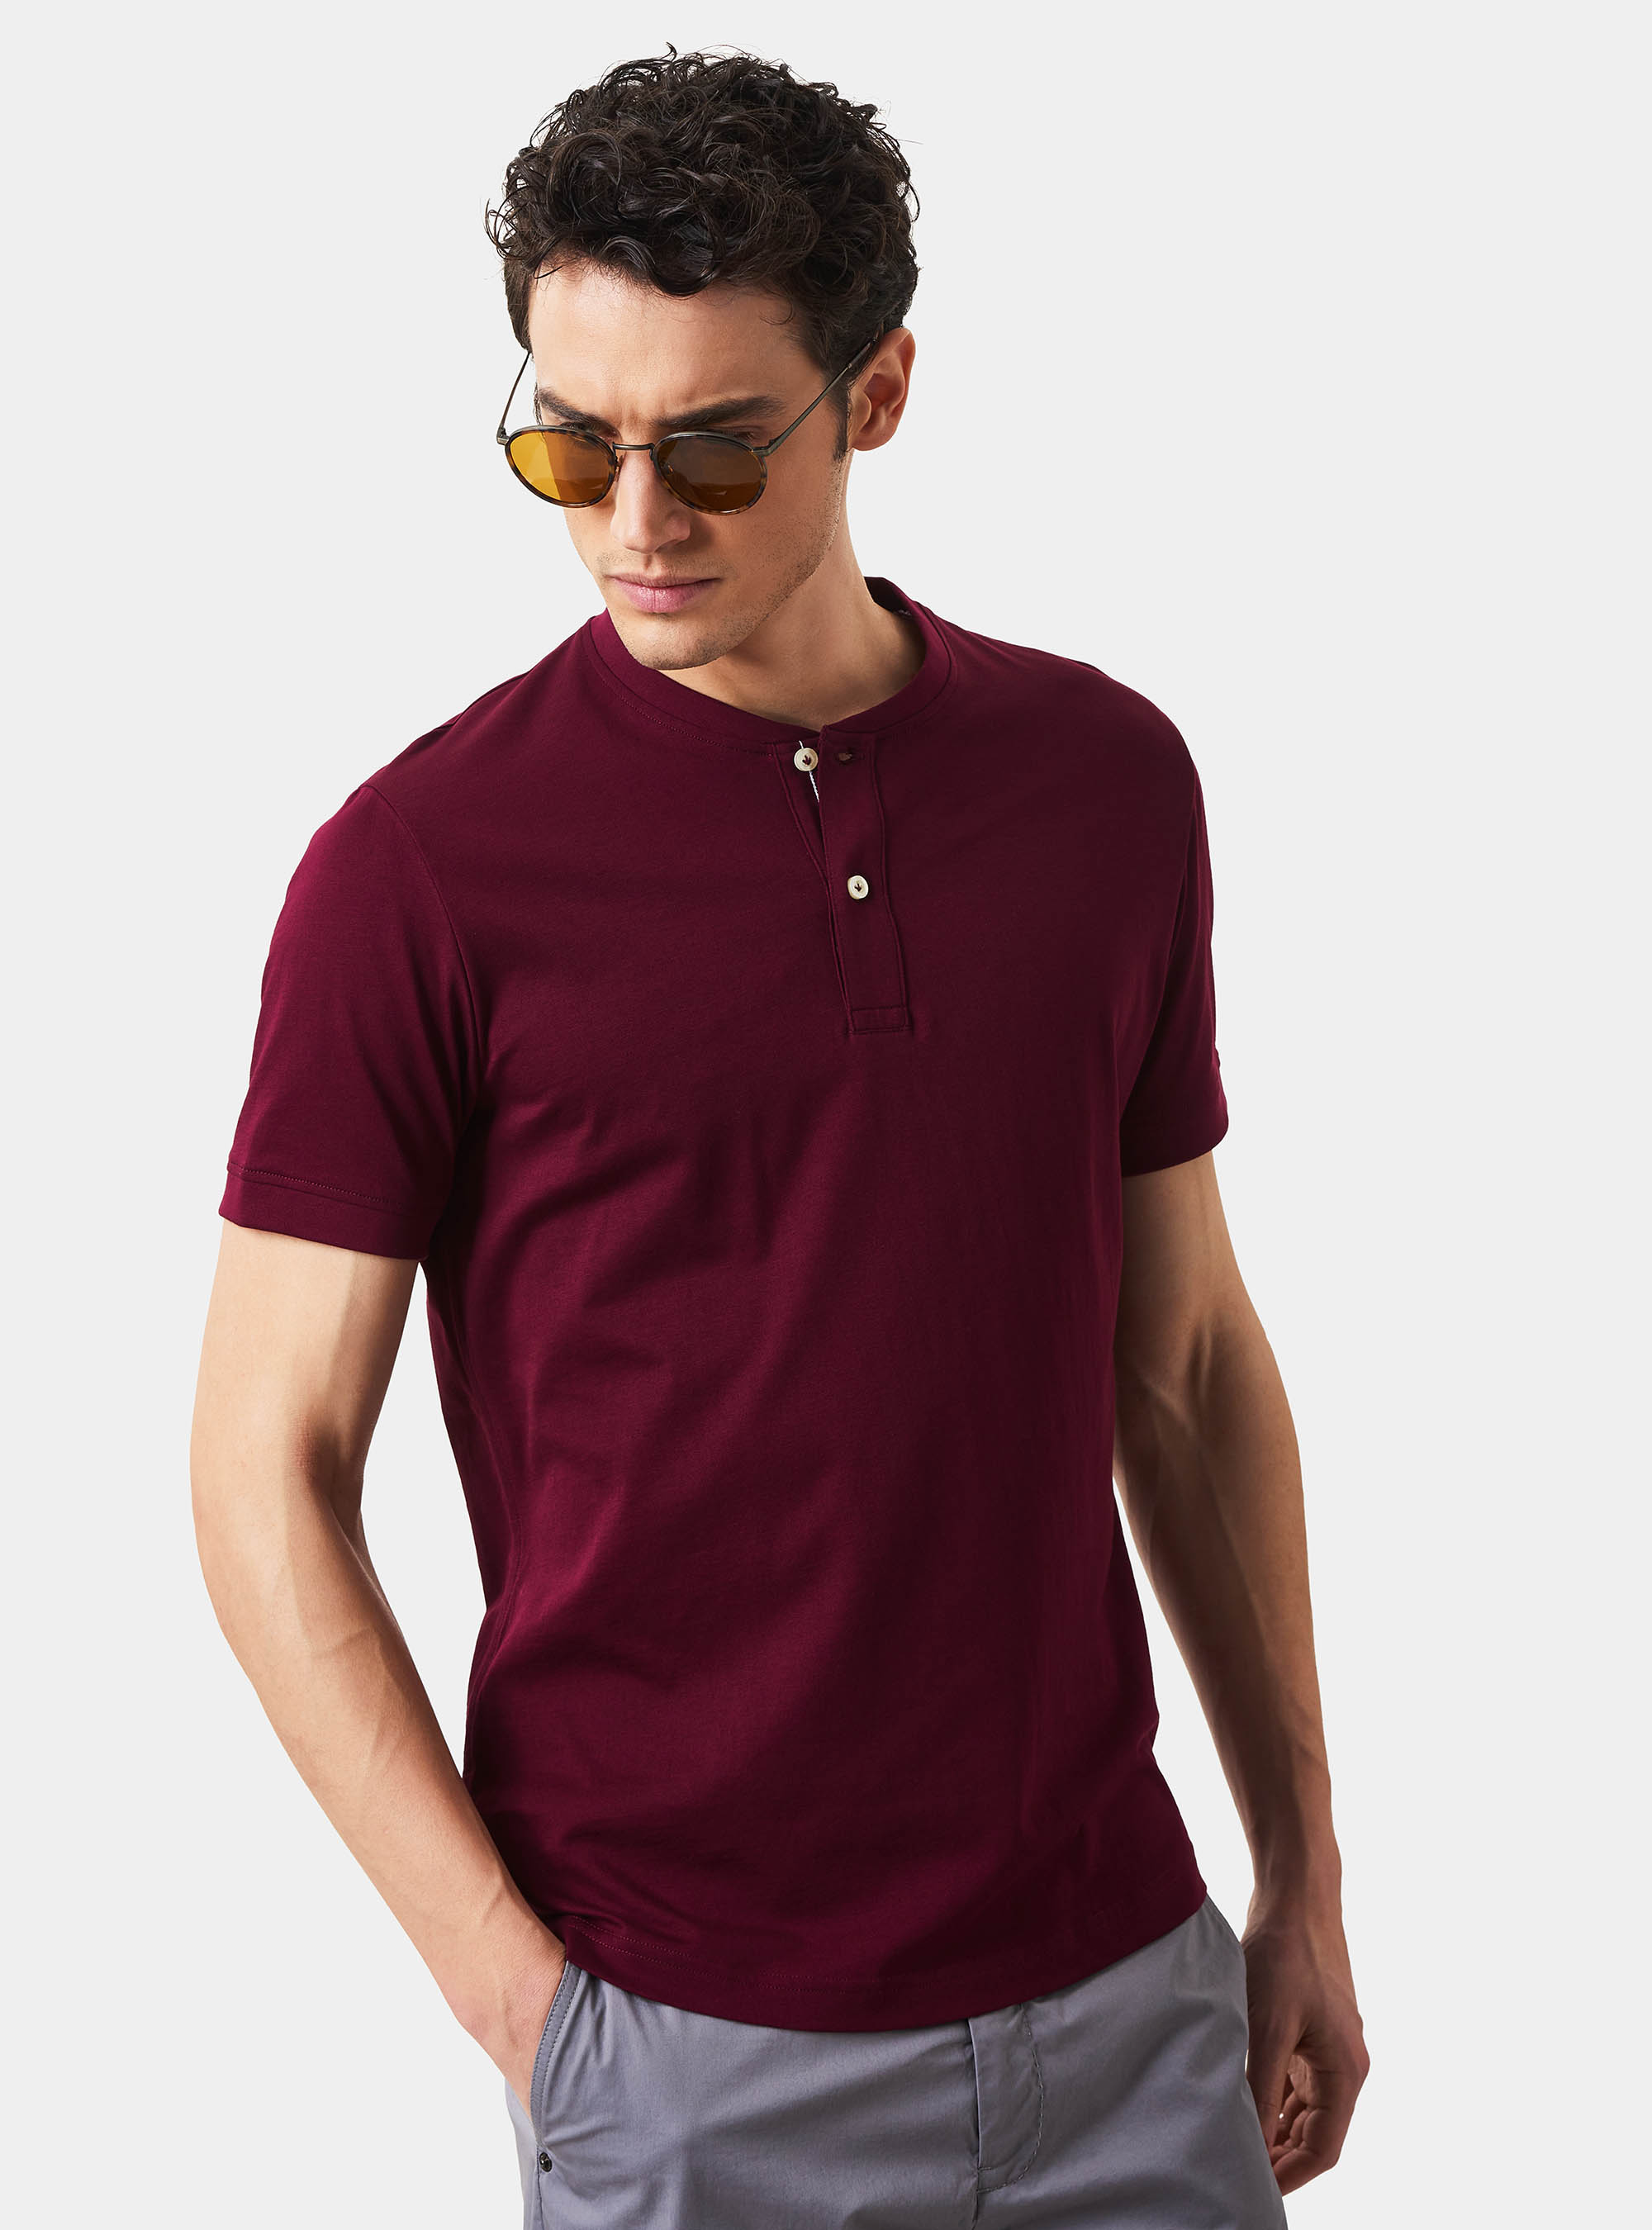 Serafino T-shirt in 100% cotton supima jersey | GutteridgeUS | Clothing Uomo